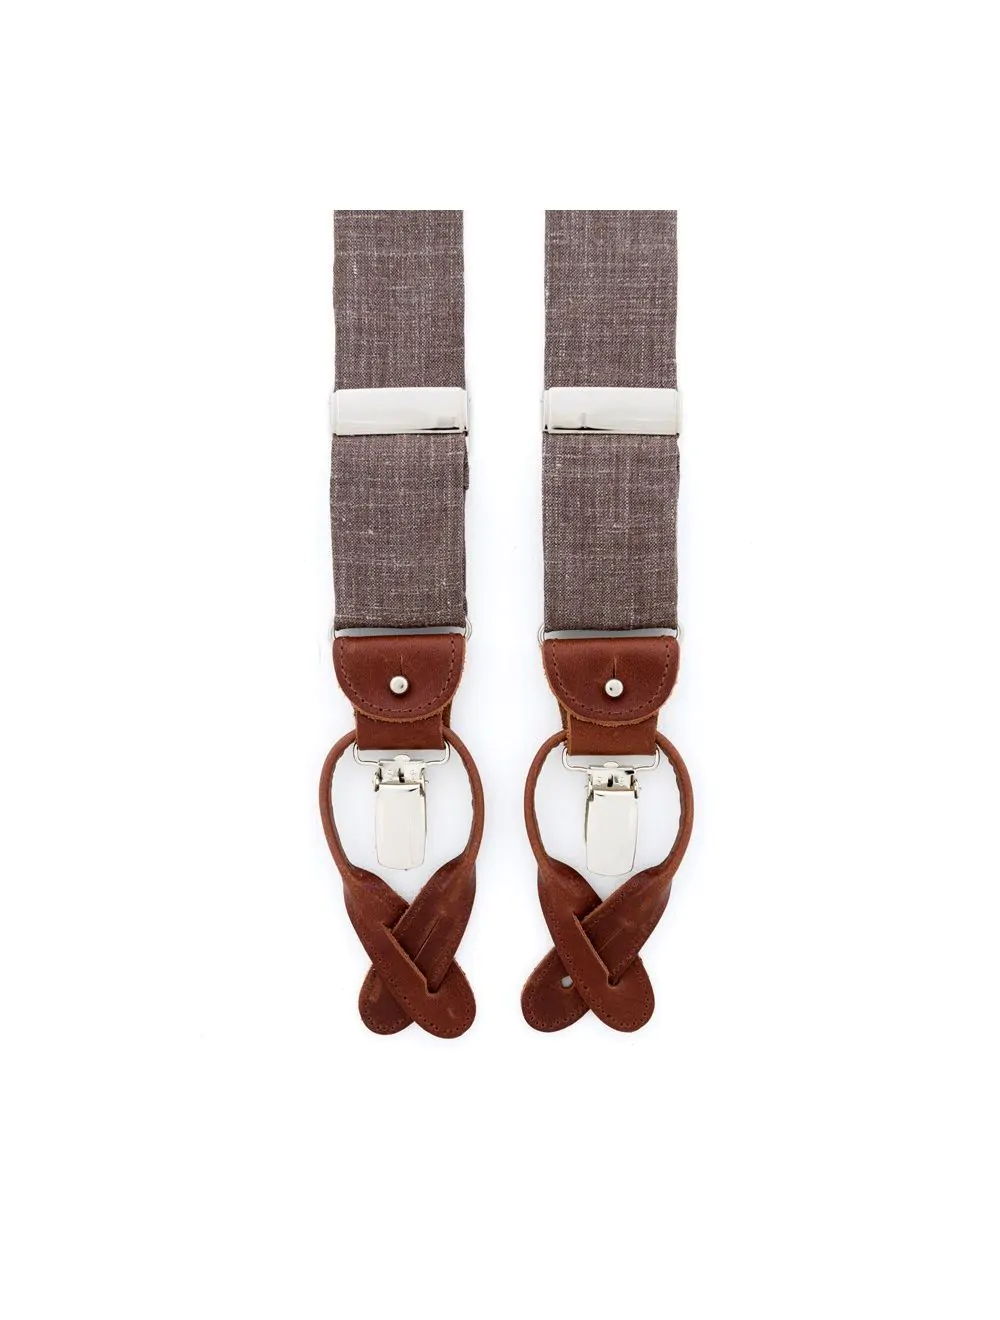 Rondsel In het algemeen knuffel Bruine bretels, handgemaakt van exclusieve Hardy Minnis wol uit Engeland |  Bretels.nl